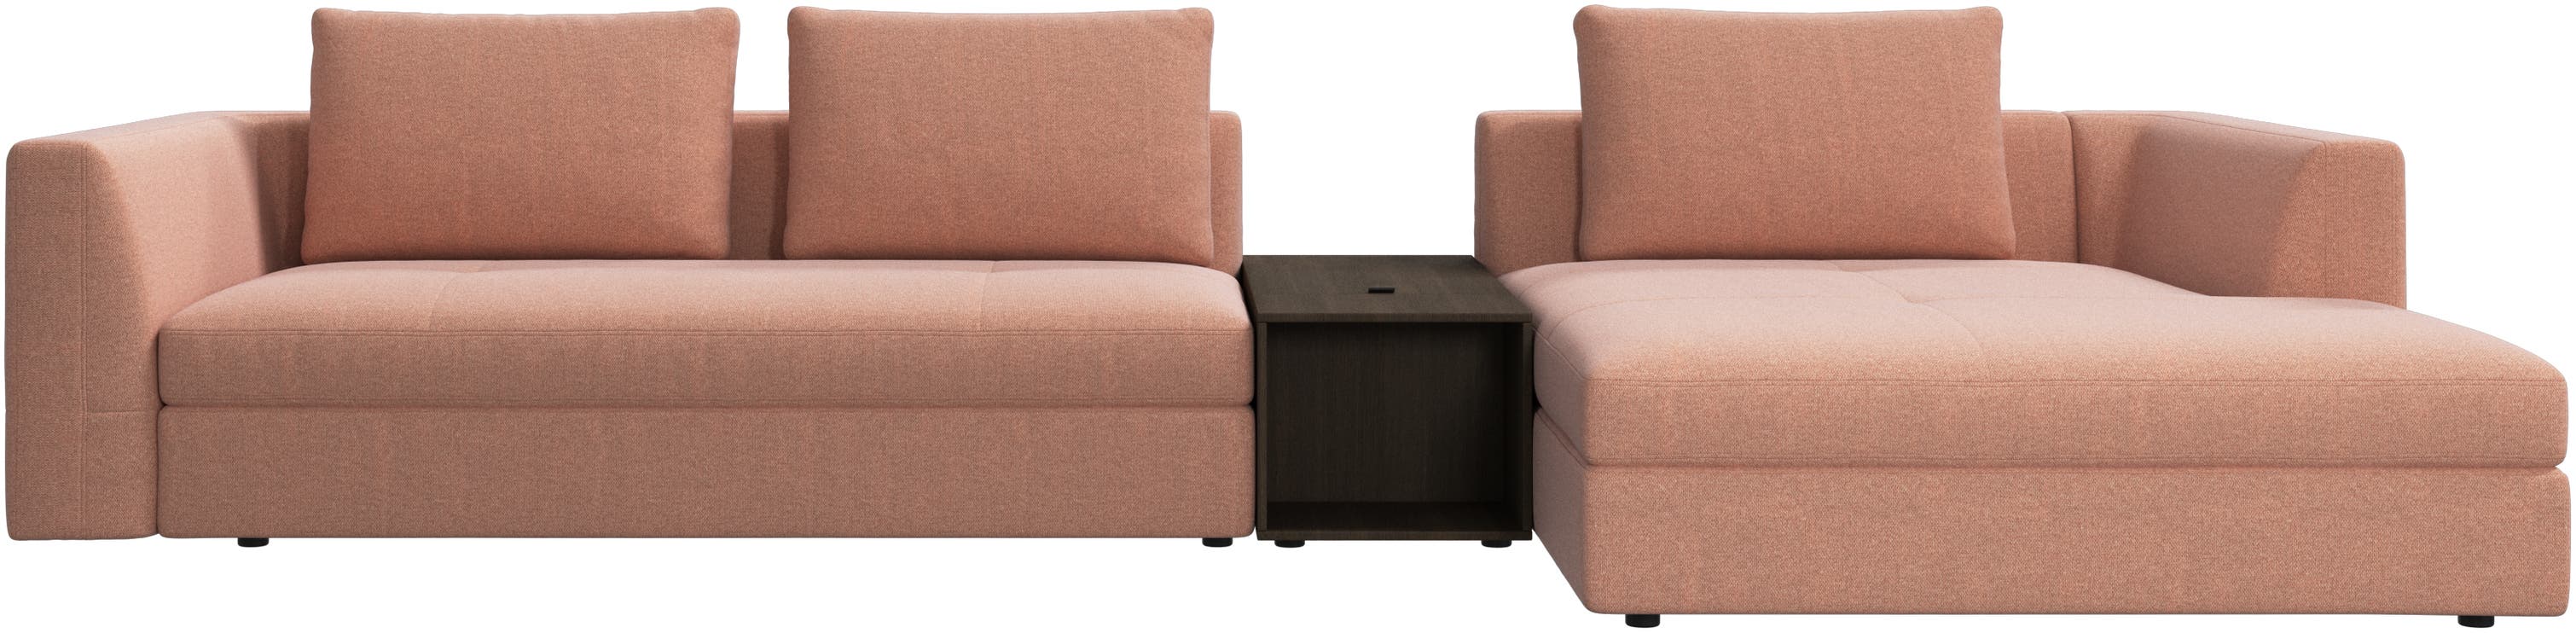 Bergamo chaise longue sofa with storage